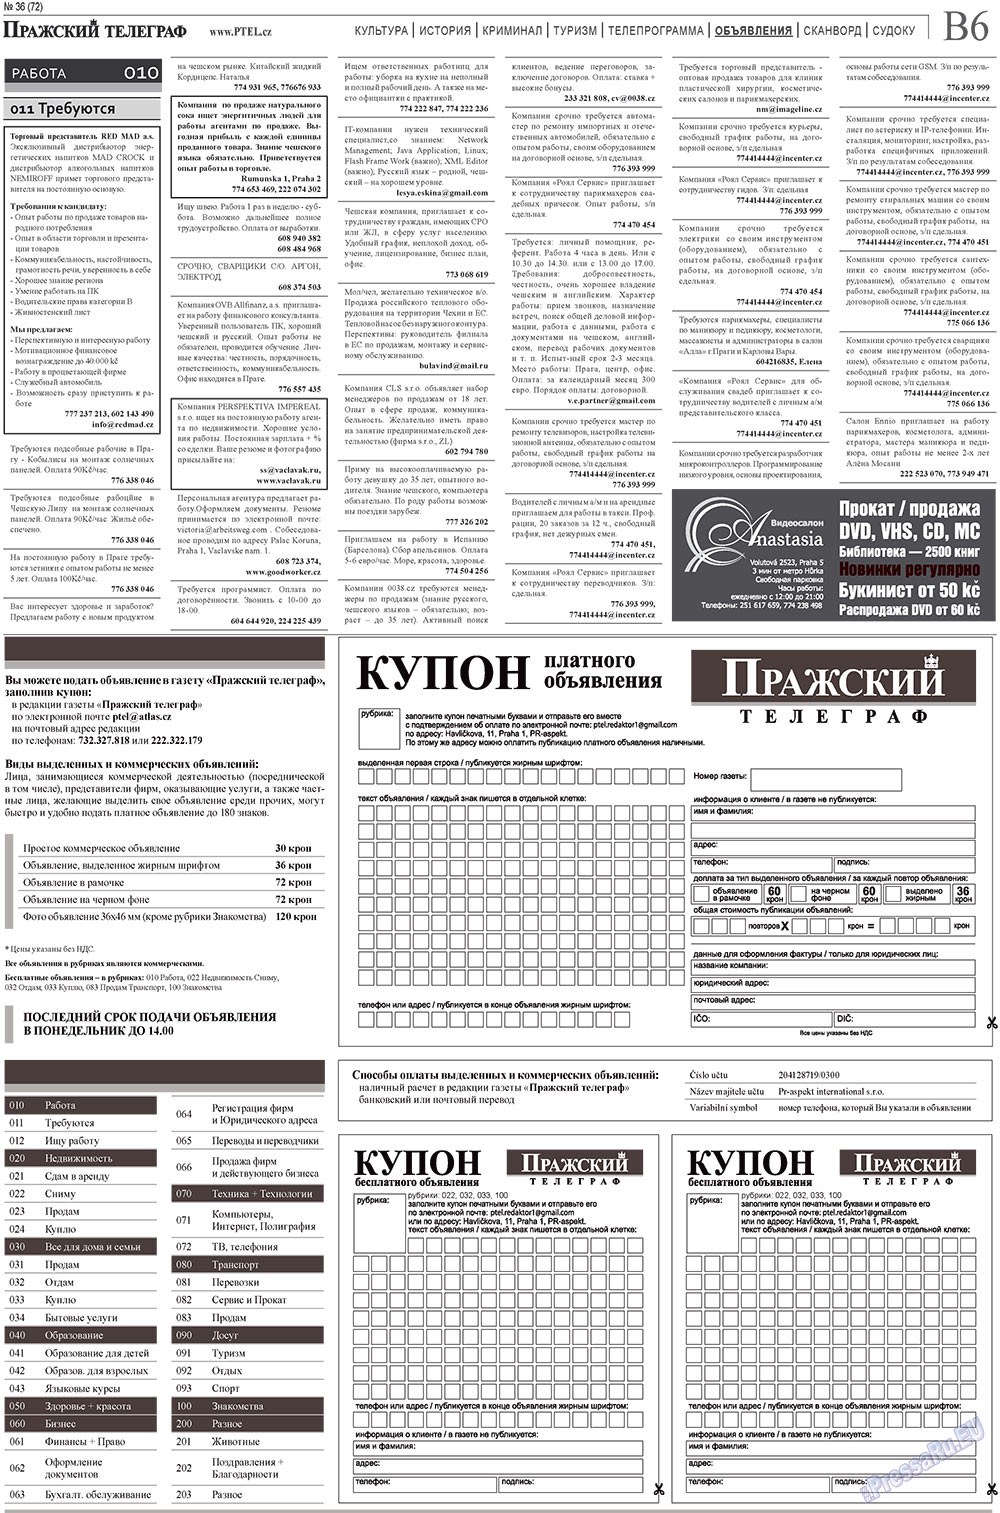 Пражский телеграф, газета. 2010 №36 стр.14